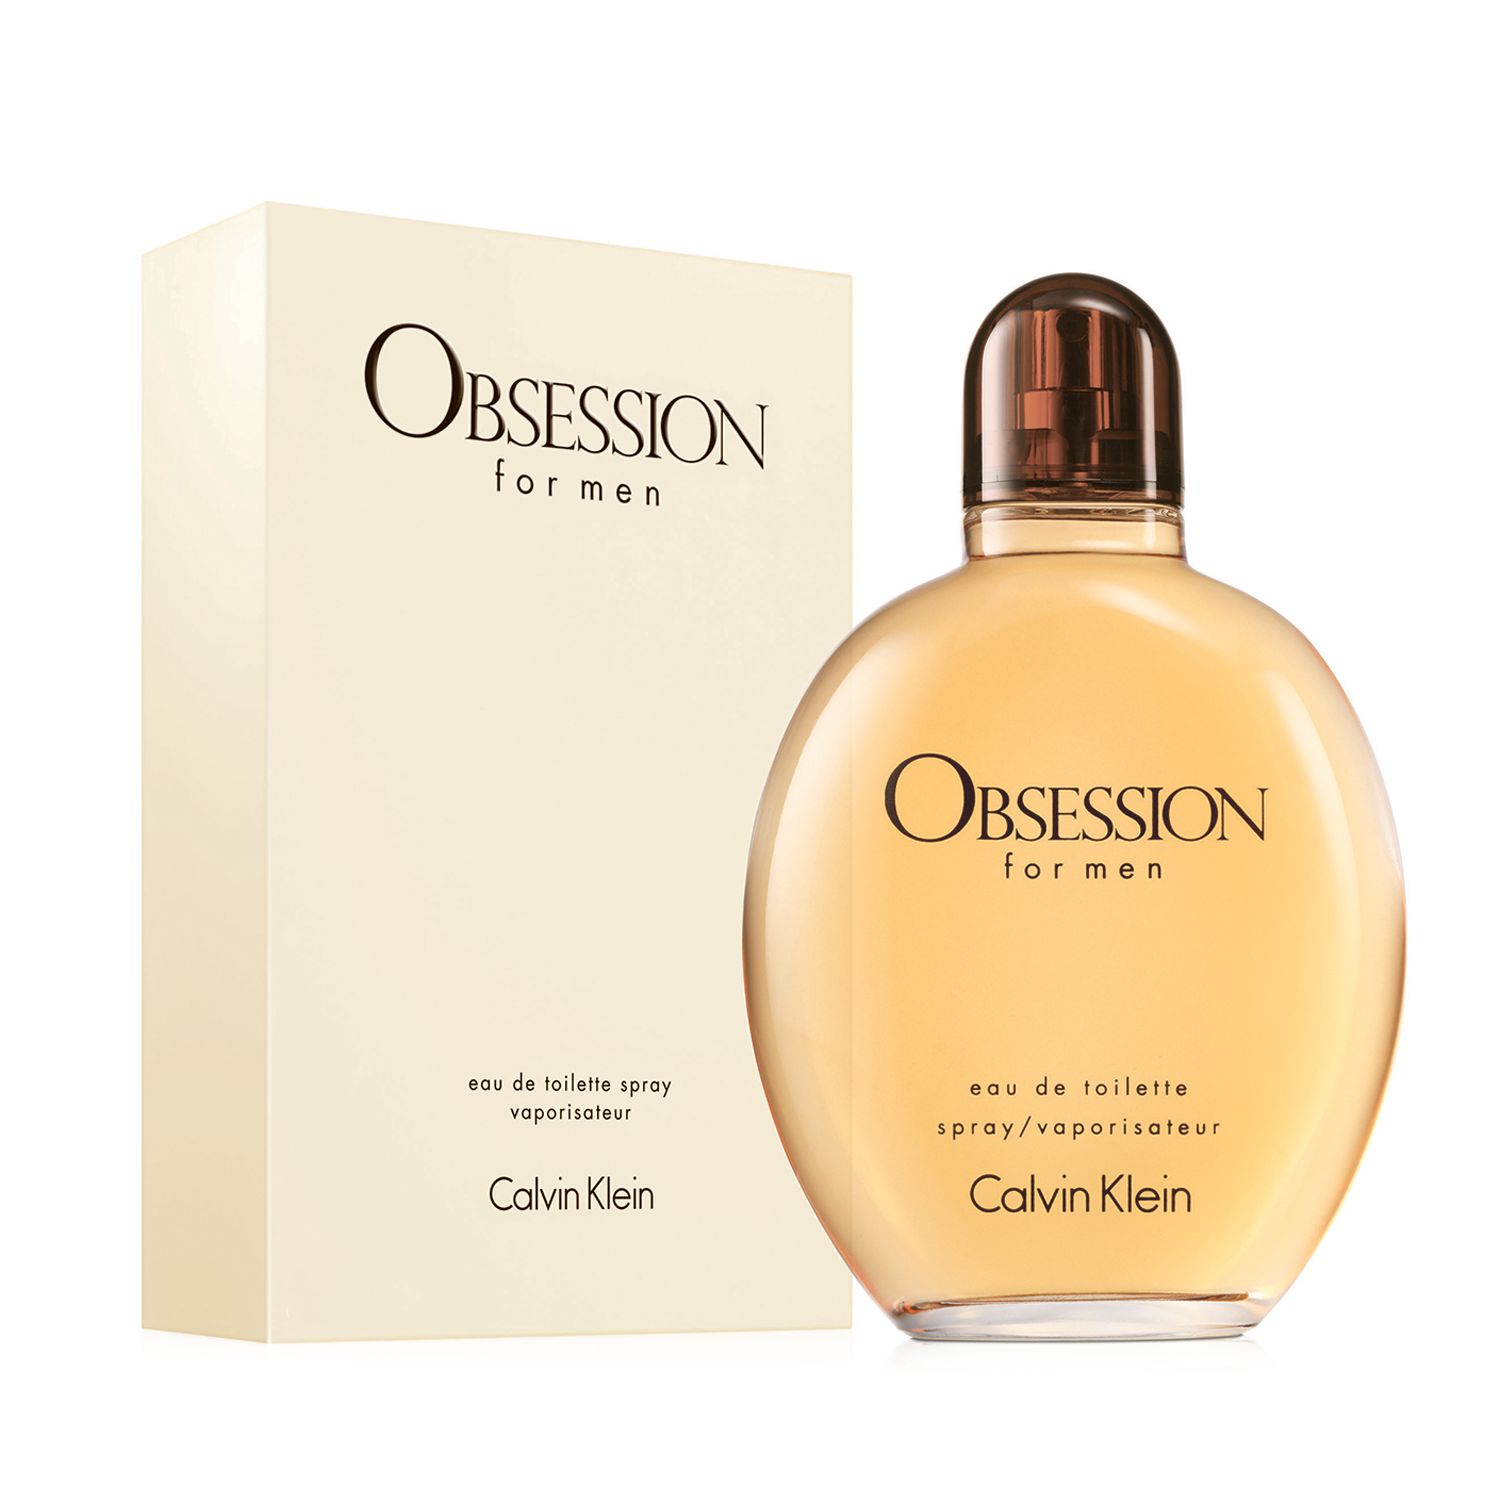 perfume ck obsession